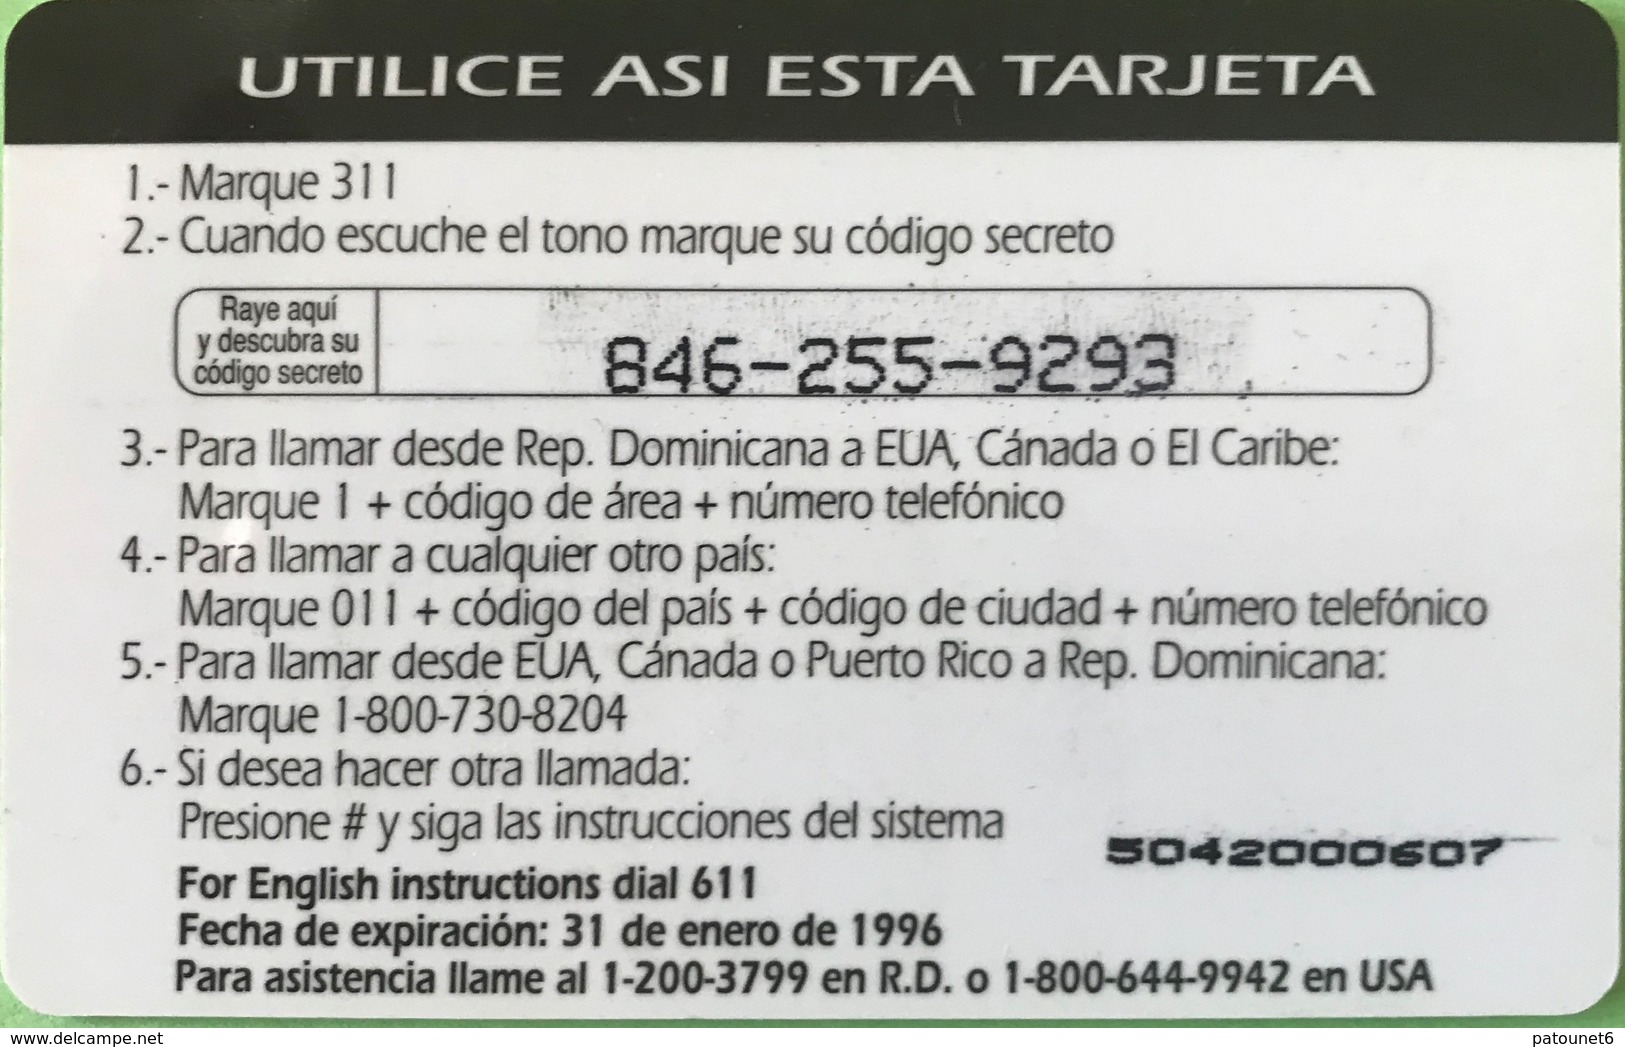 DOMINICAINE  -  Prepaid  - Comuni-Card - Codetel - Edicion 1995 -  $45 - Dominicaine